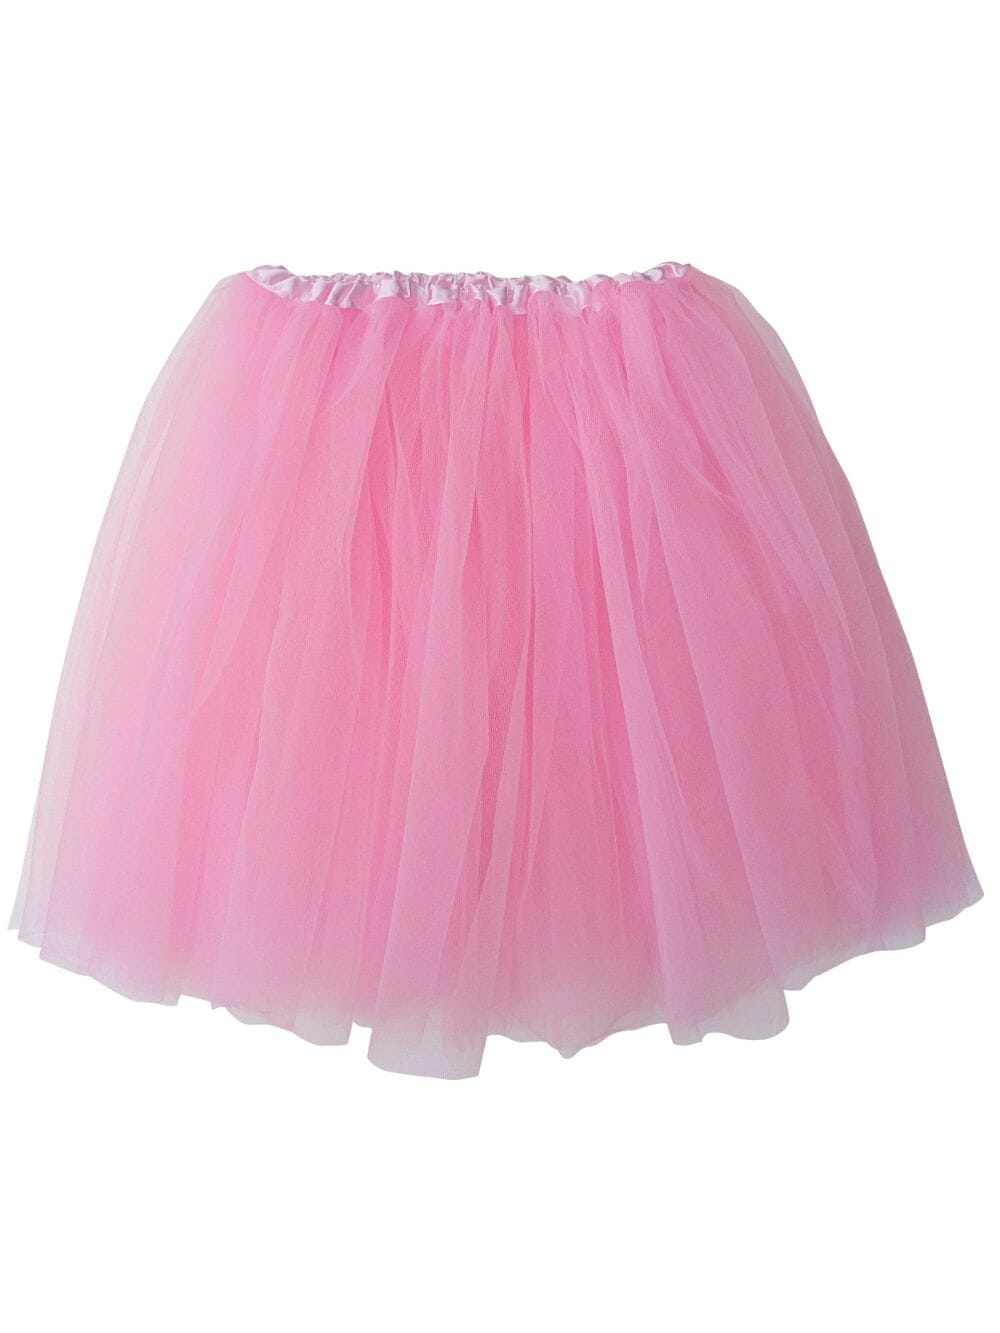 Plus Size Pink Tutu Skirt - Plus Size 3-Layer Tulle Skirt Dress Up Tutus for Women - Sydney So Sweet